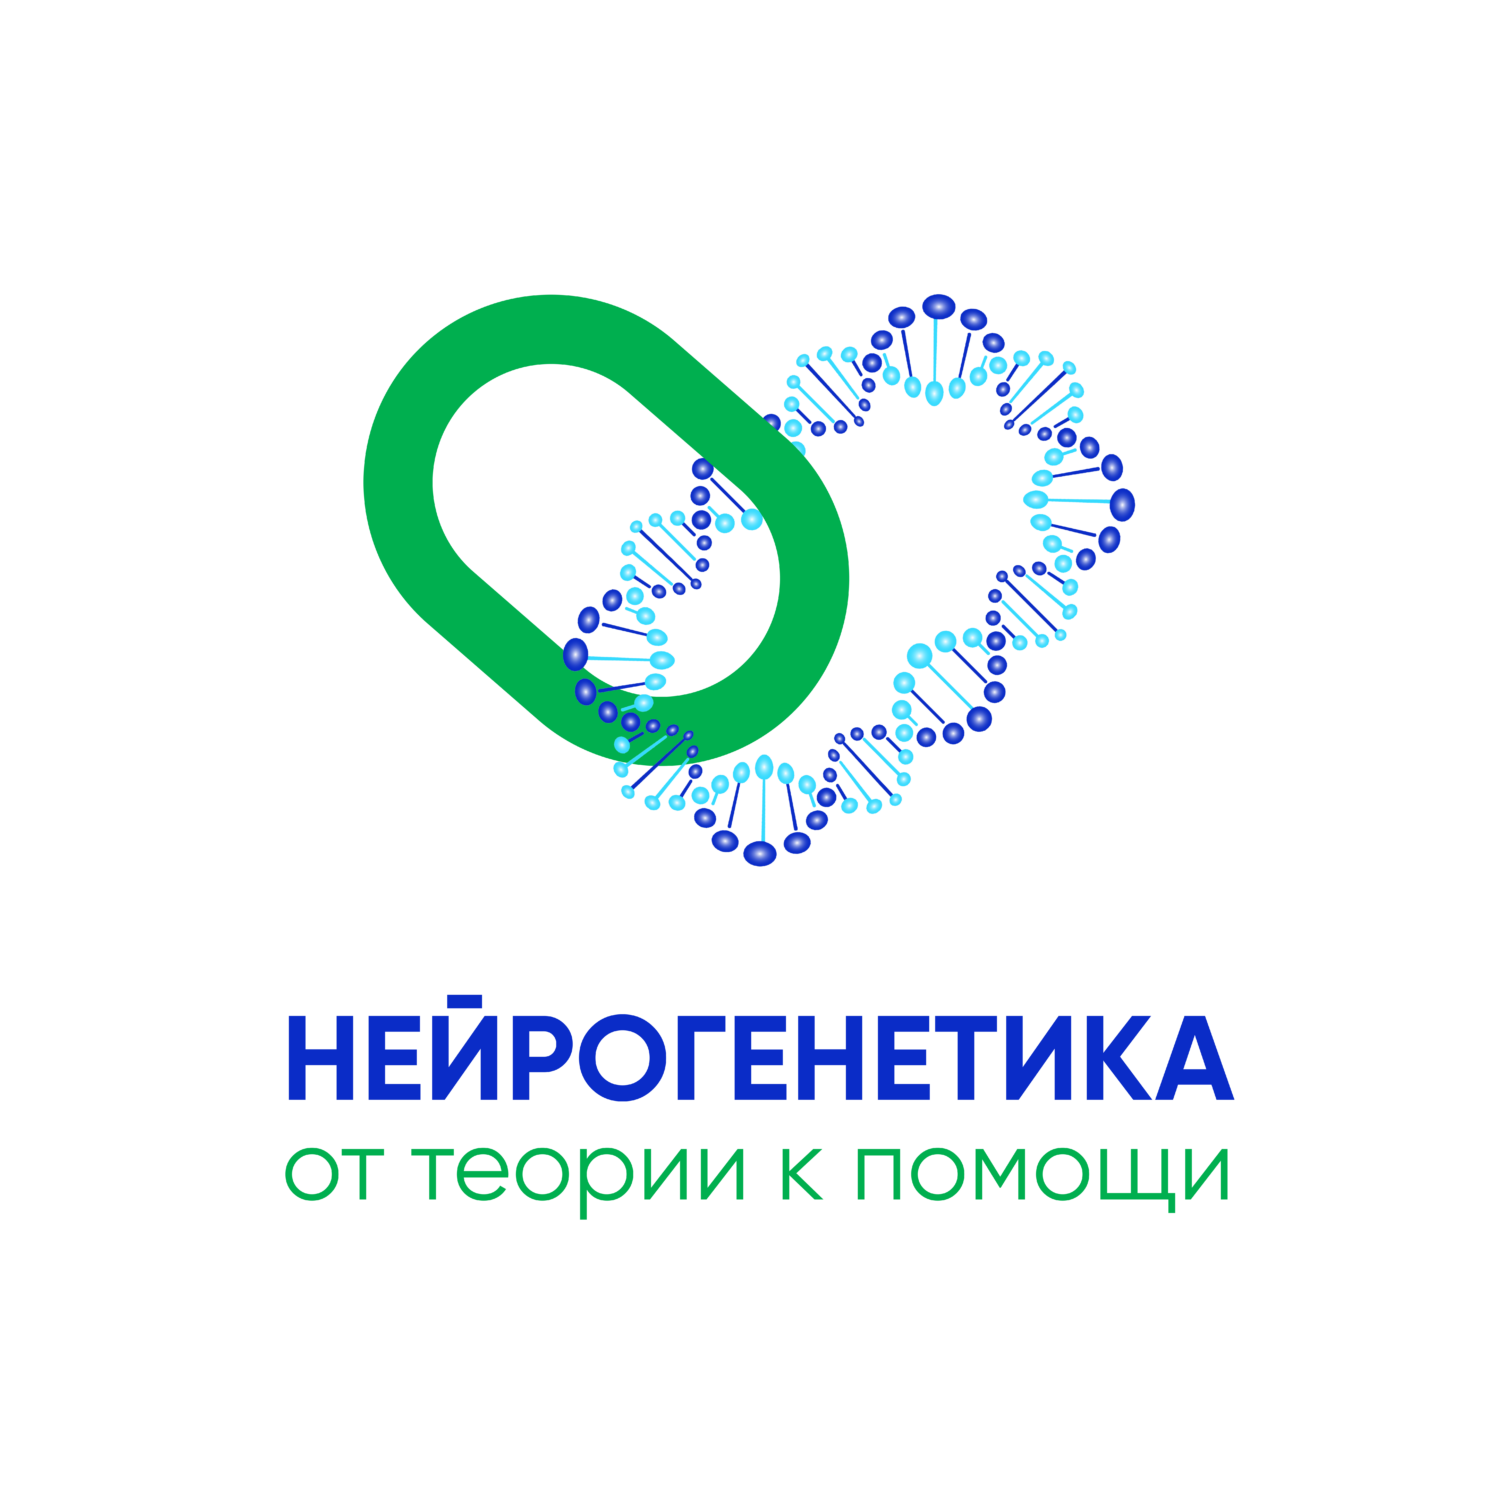 Логотип. Круг